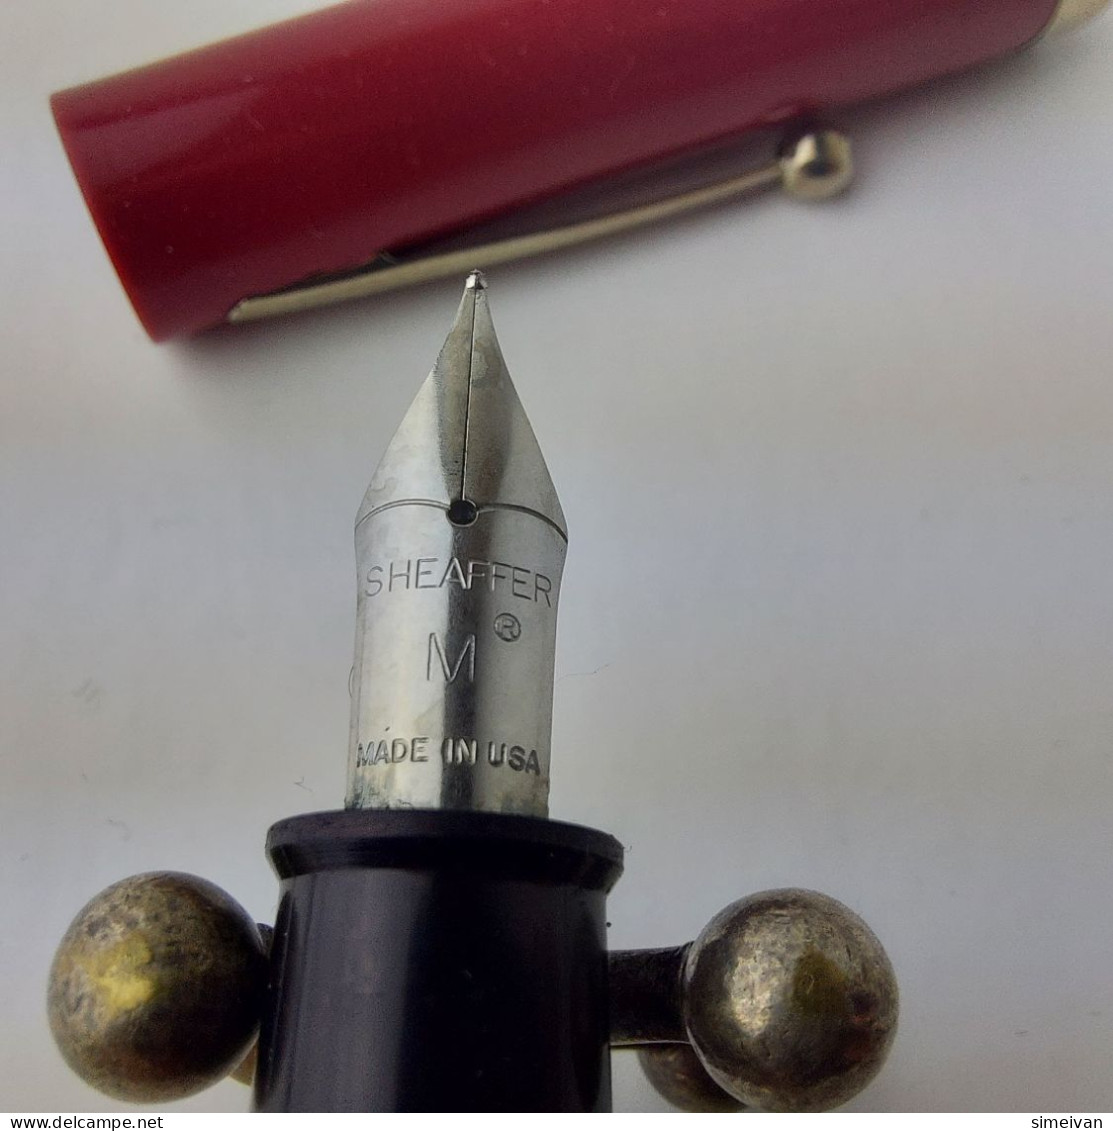 Vintage Sheaffer NO NONSENSE Fountain Pen Medium Nib Made in USA #5503